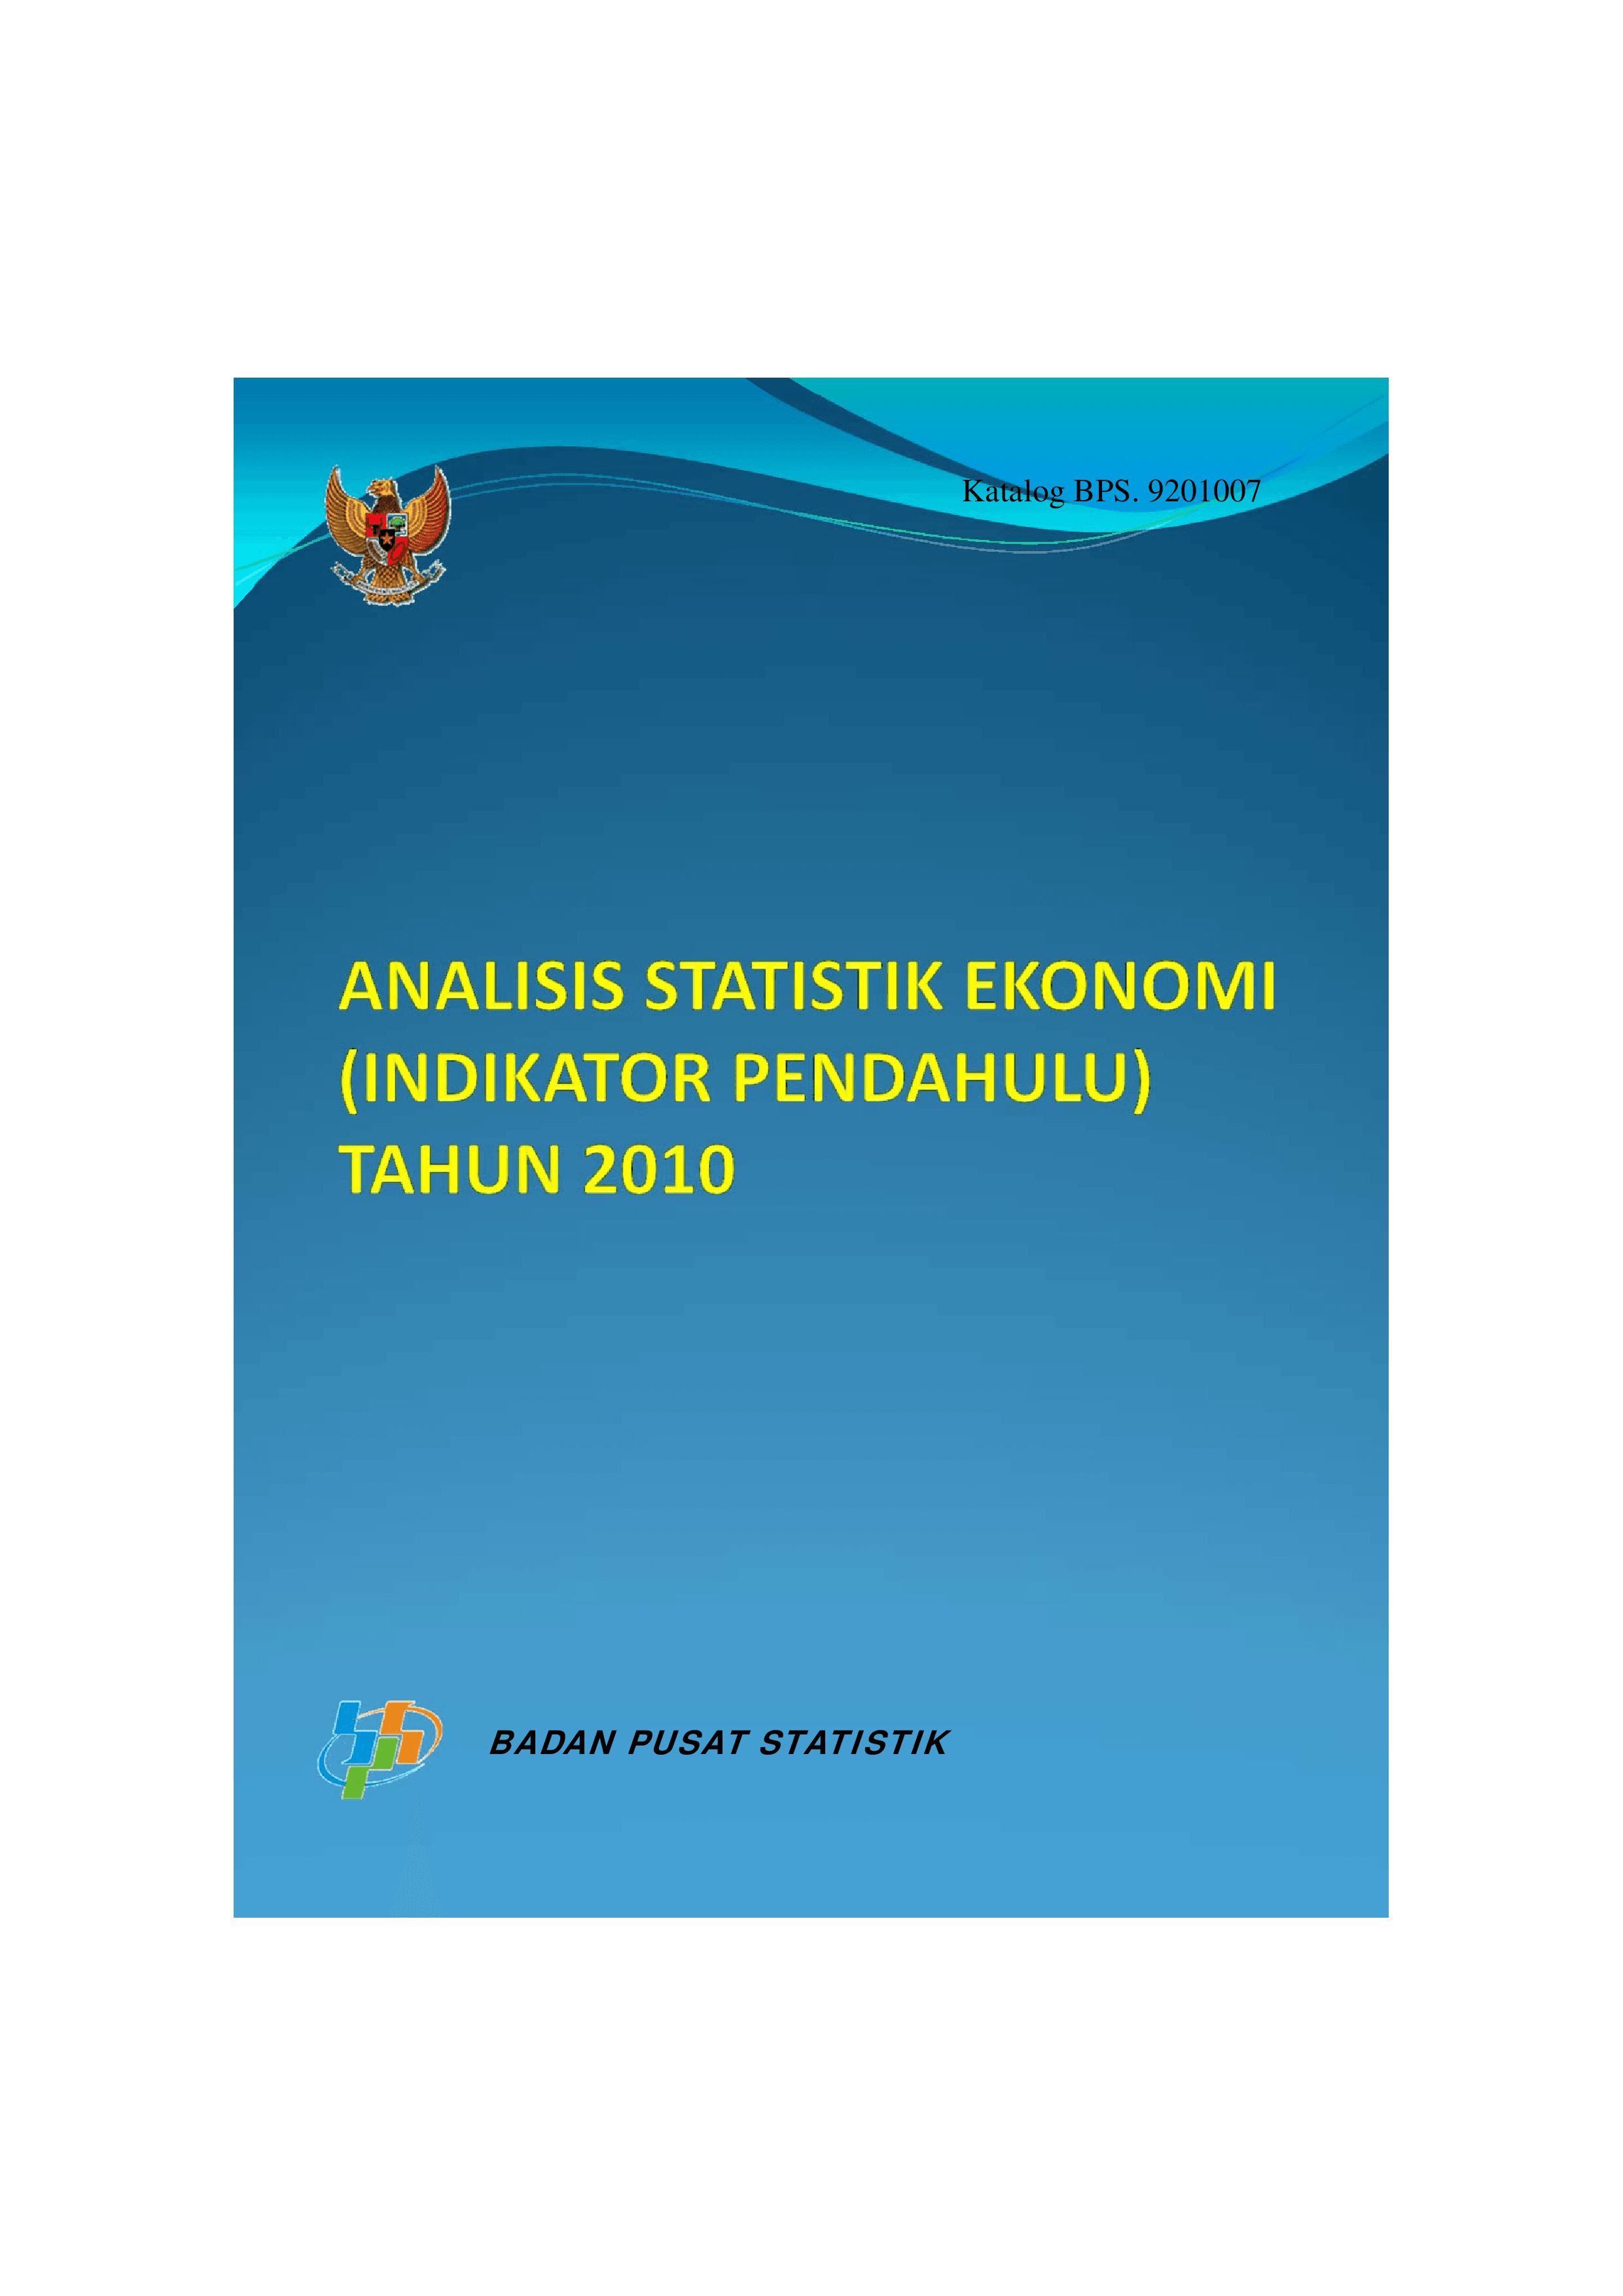 Analysis of Economic Statistics (Leading Indicator) 2010